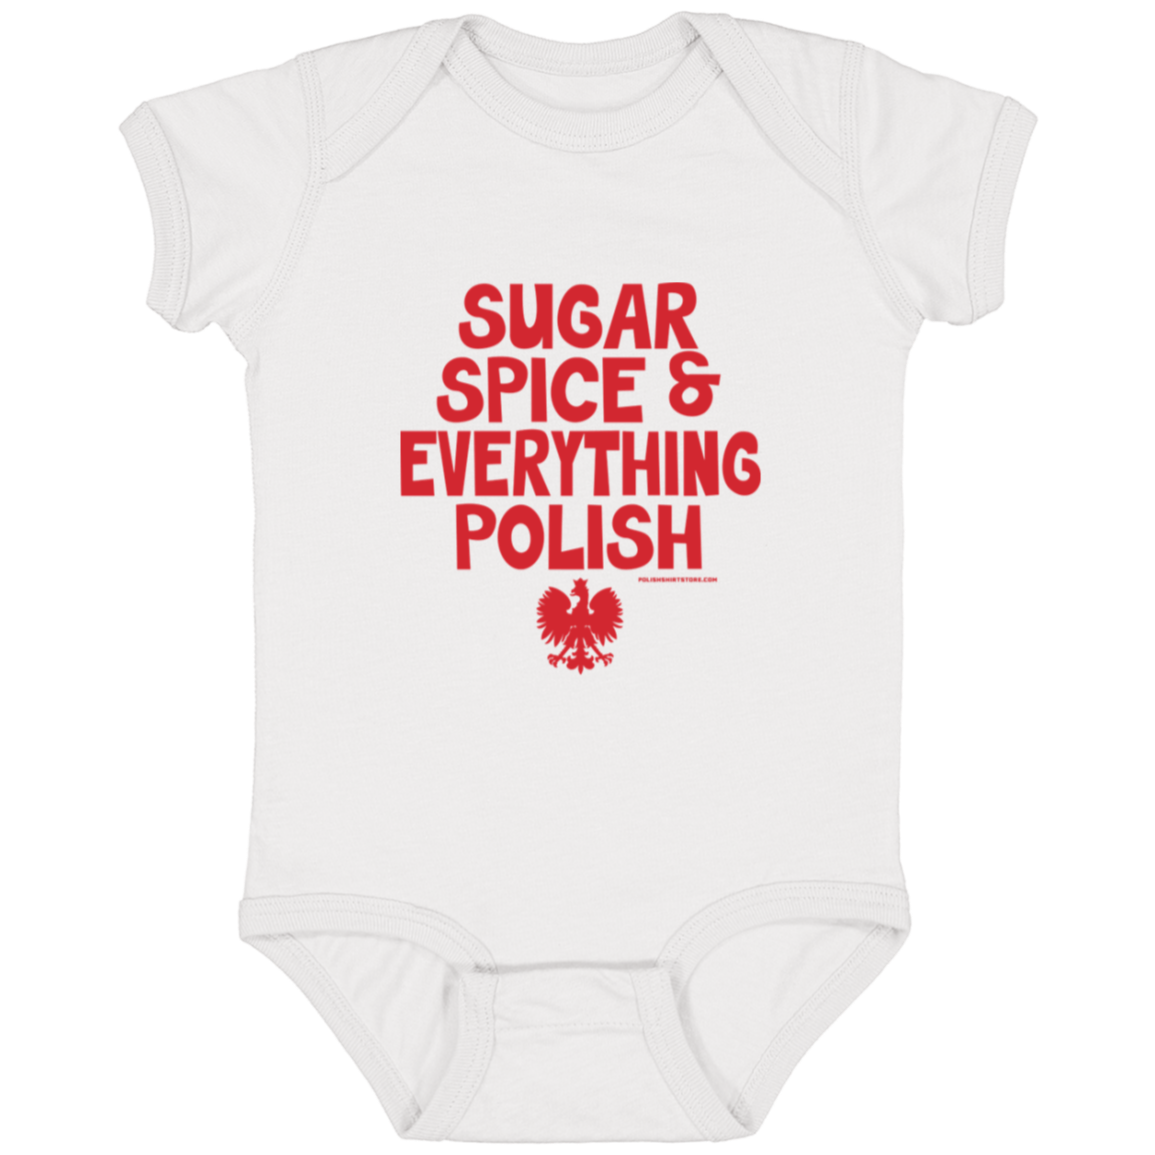 Sugar Spice & Everything Polish Infant Bodysuit Baby CustomCat White Newborn 